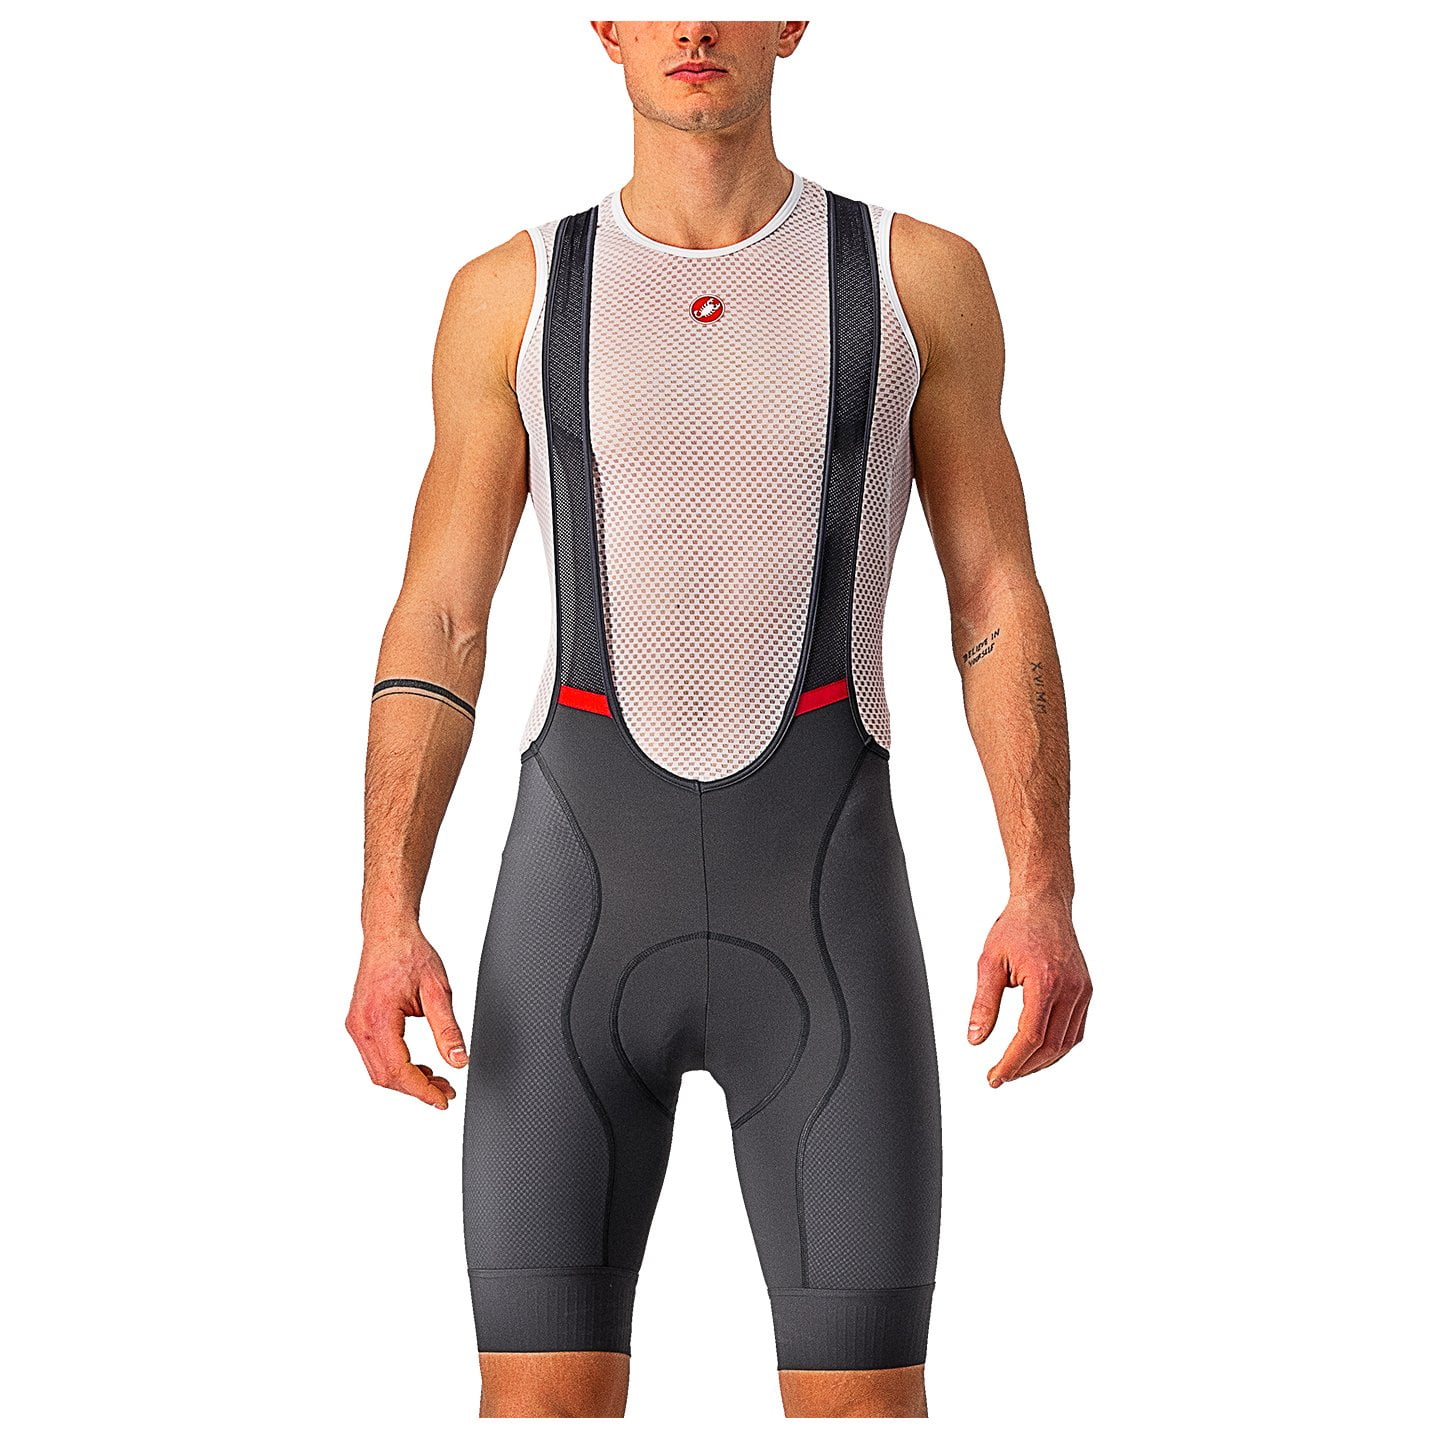 Competizione Bib Shorts Bib Shorts, for men, size L, Cycle shorts, Cycling clothing